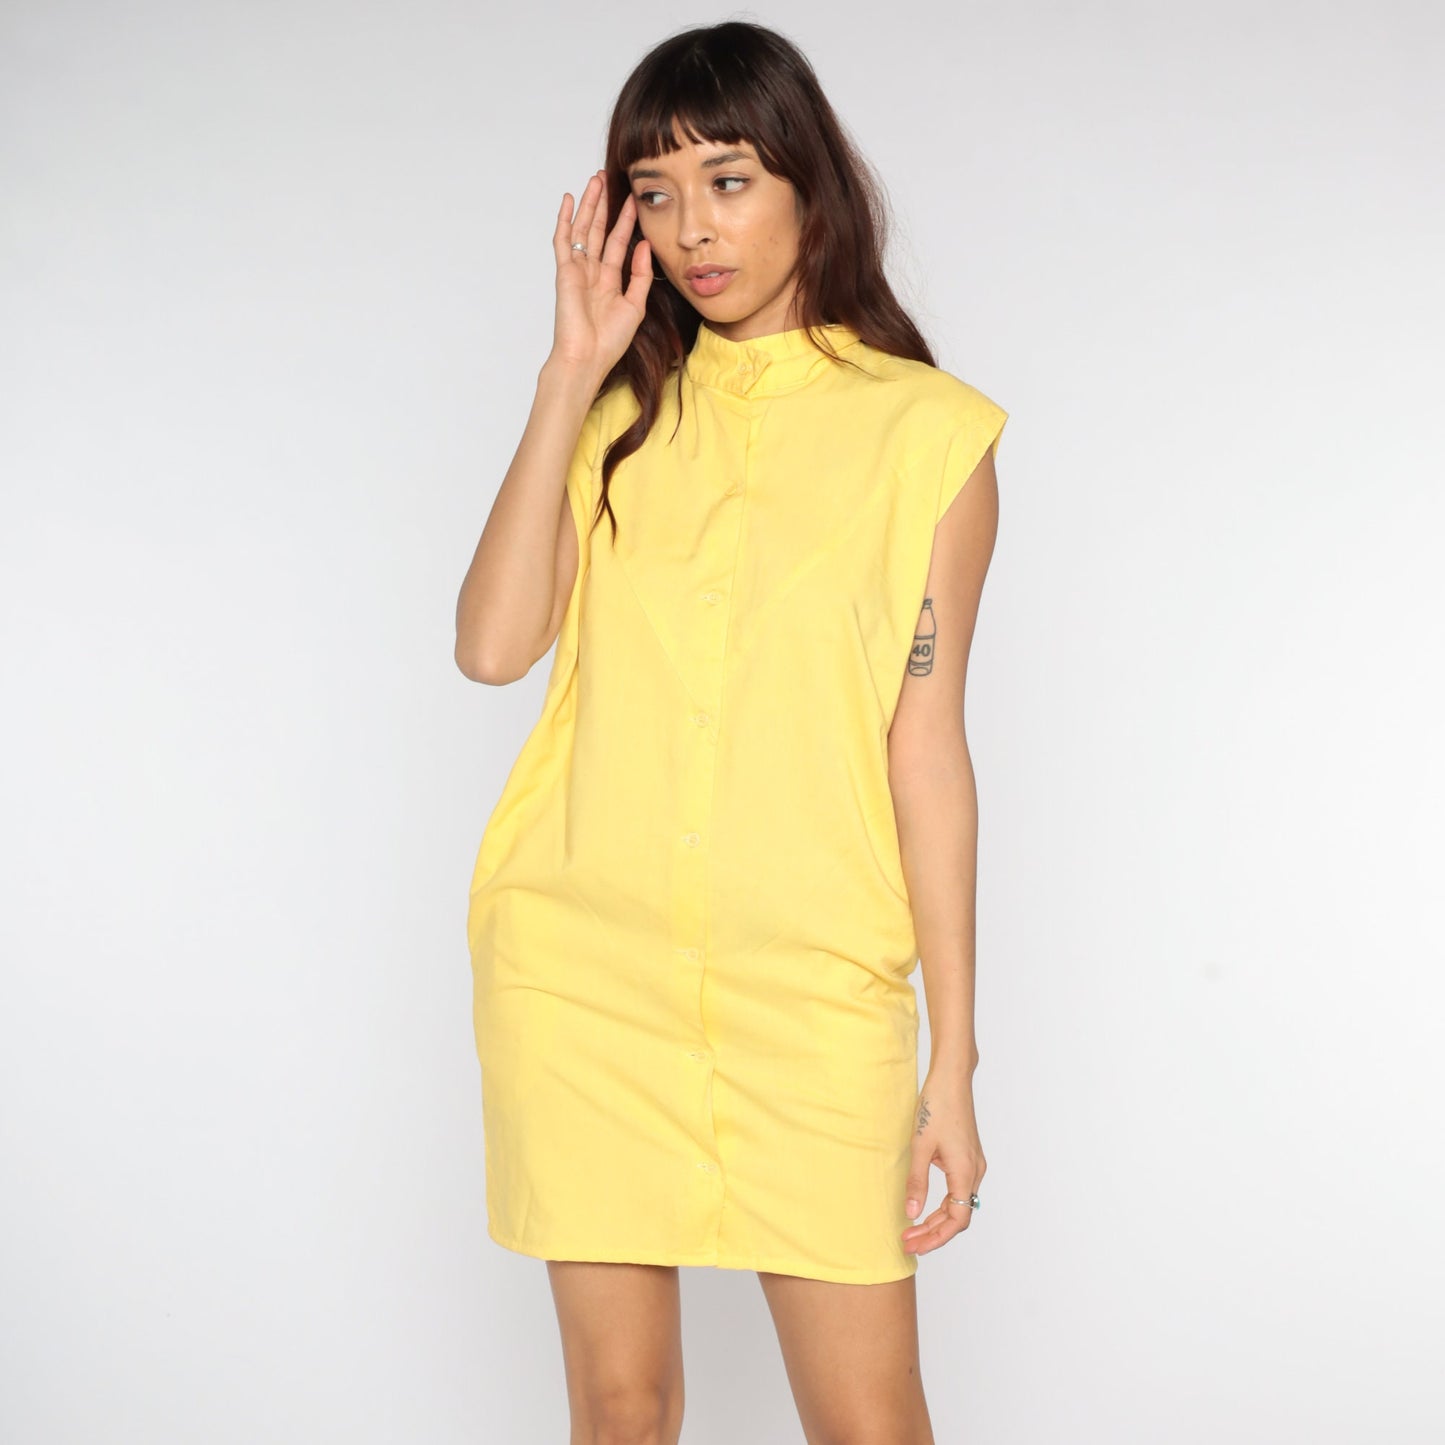 80s Mini Dress Shirtdress Shift Yellow Button Up Dress 1980s Cap Sleeve Plain Simple Vintage Retro MiniDress Collar Casual Small Medium xs